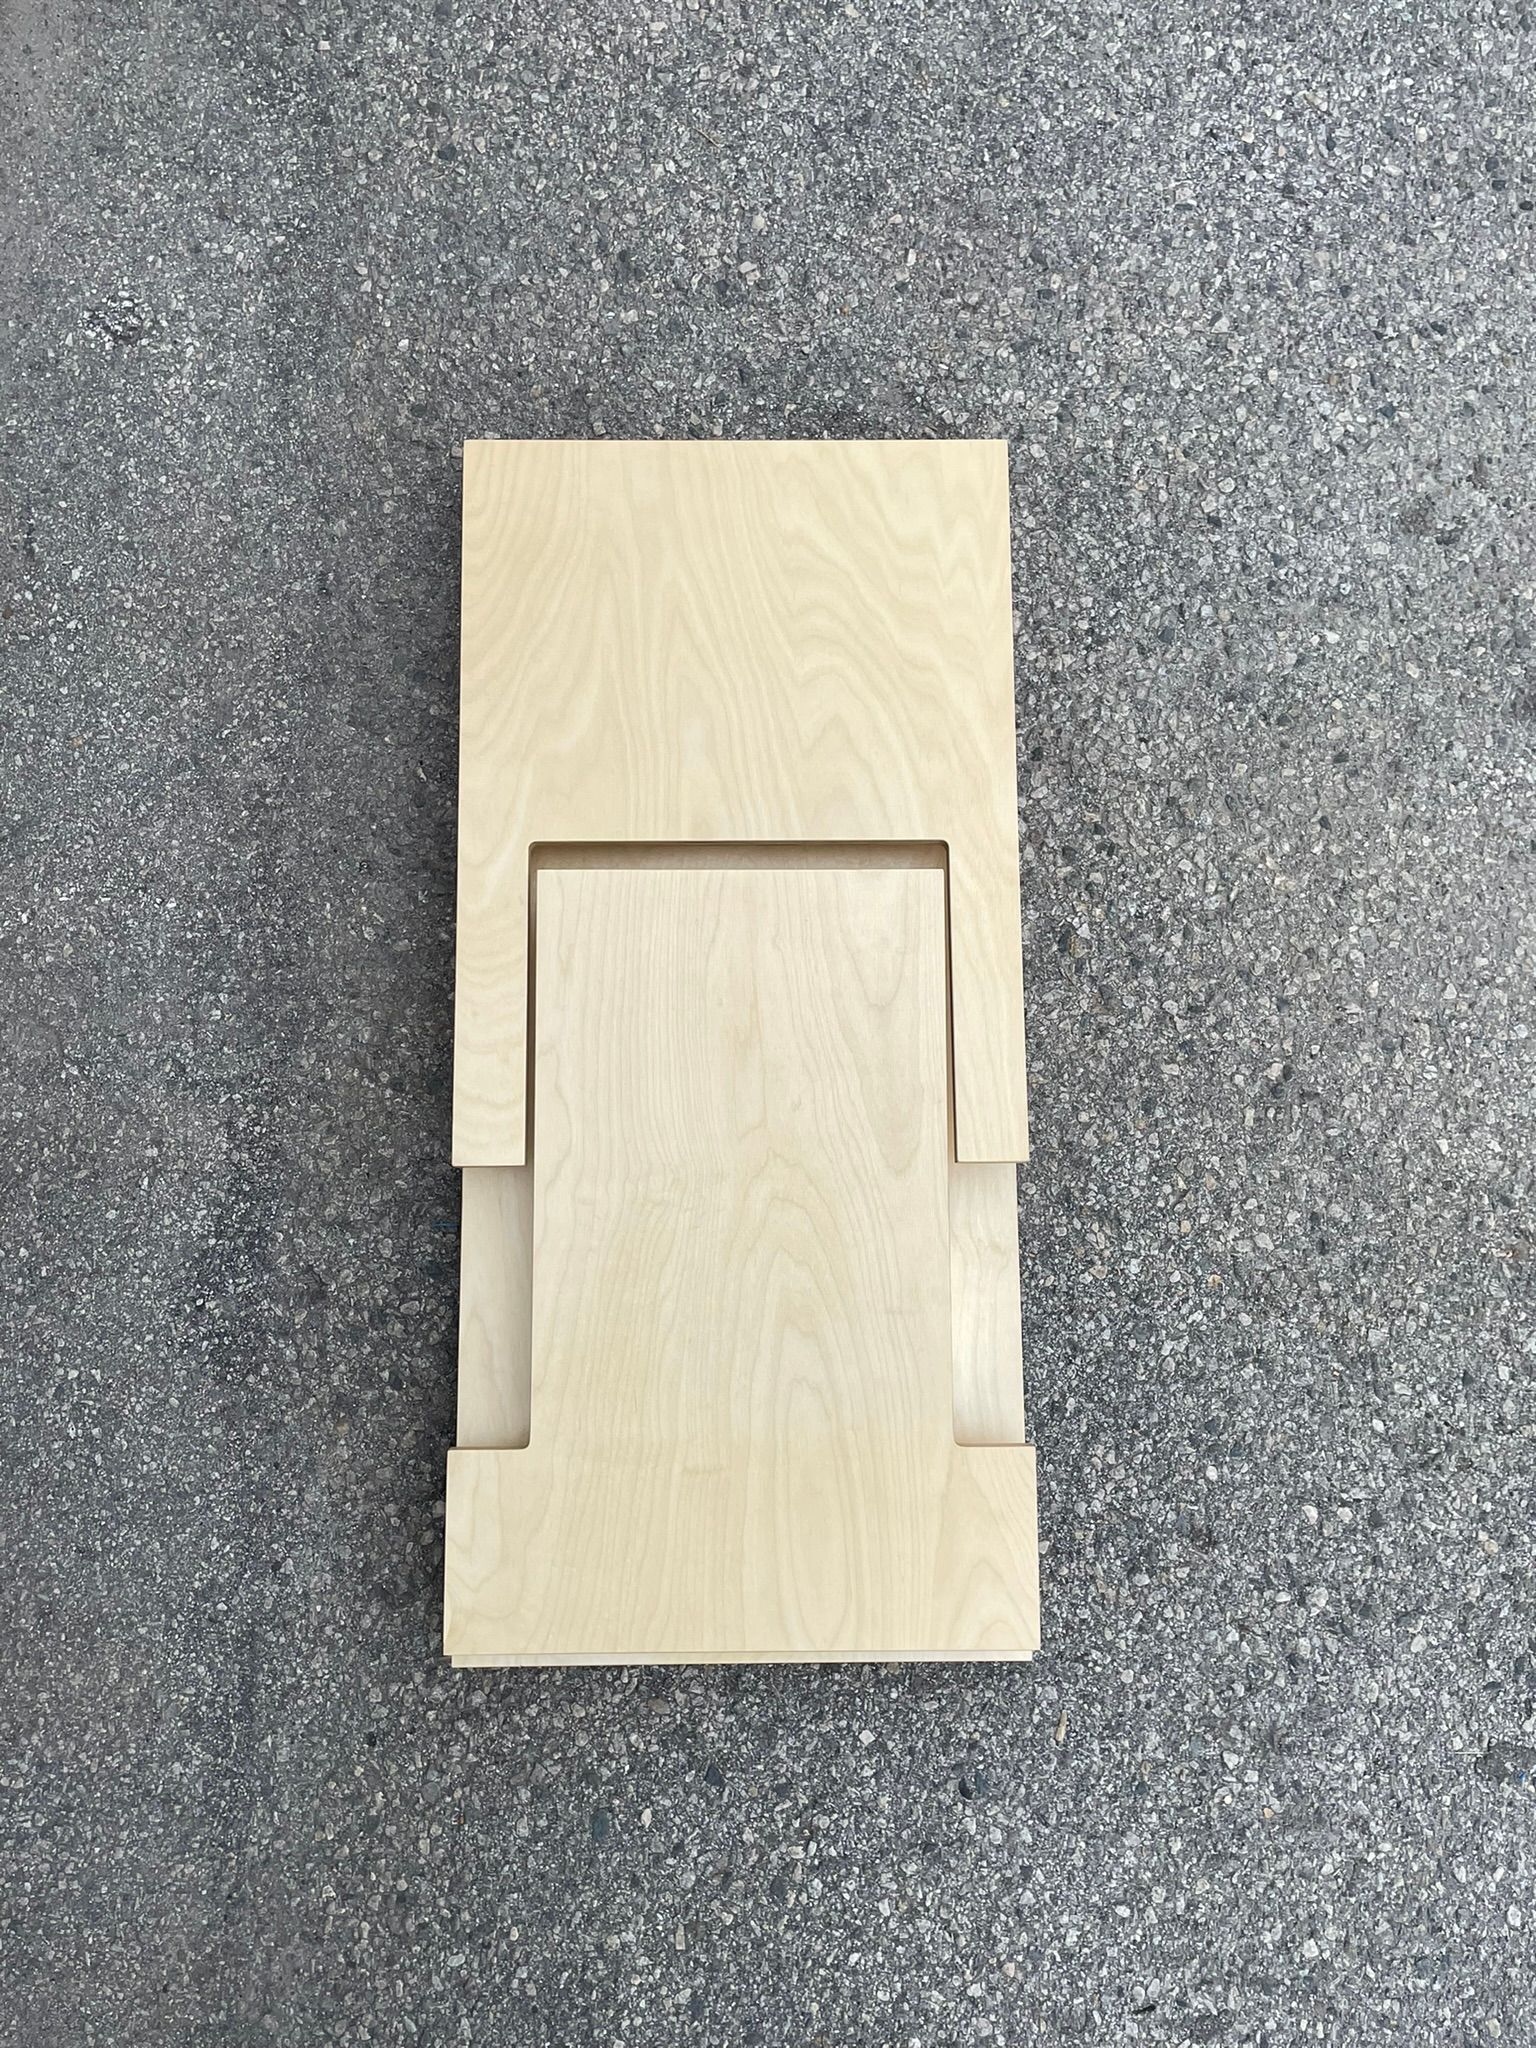  Folding Standing Desk product image 3